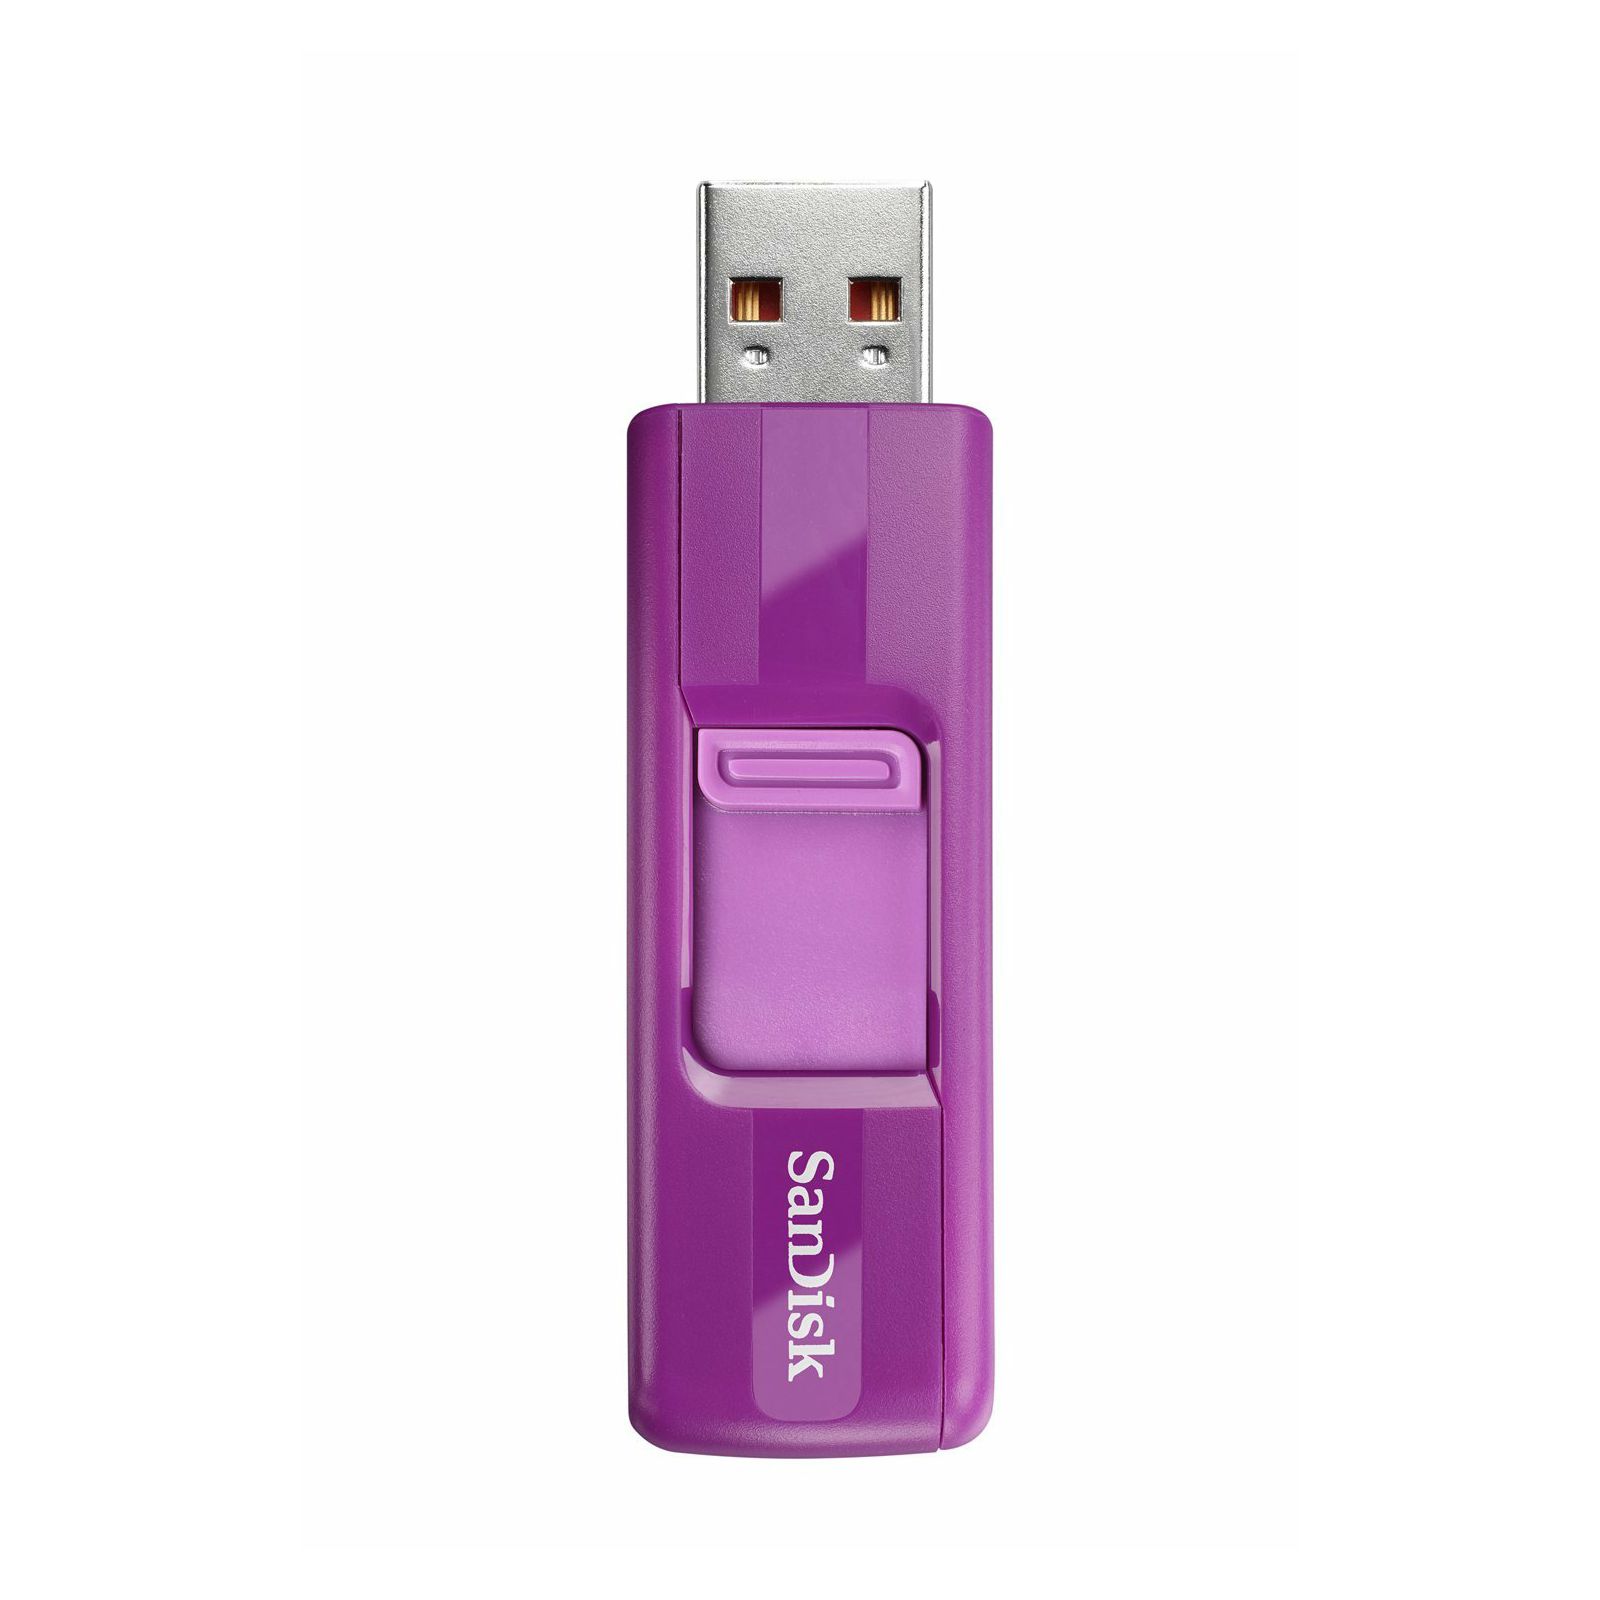 SanDisk Cruzer 8GB Purple SDCZ36E-008G-B35P USB Memory Stick